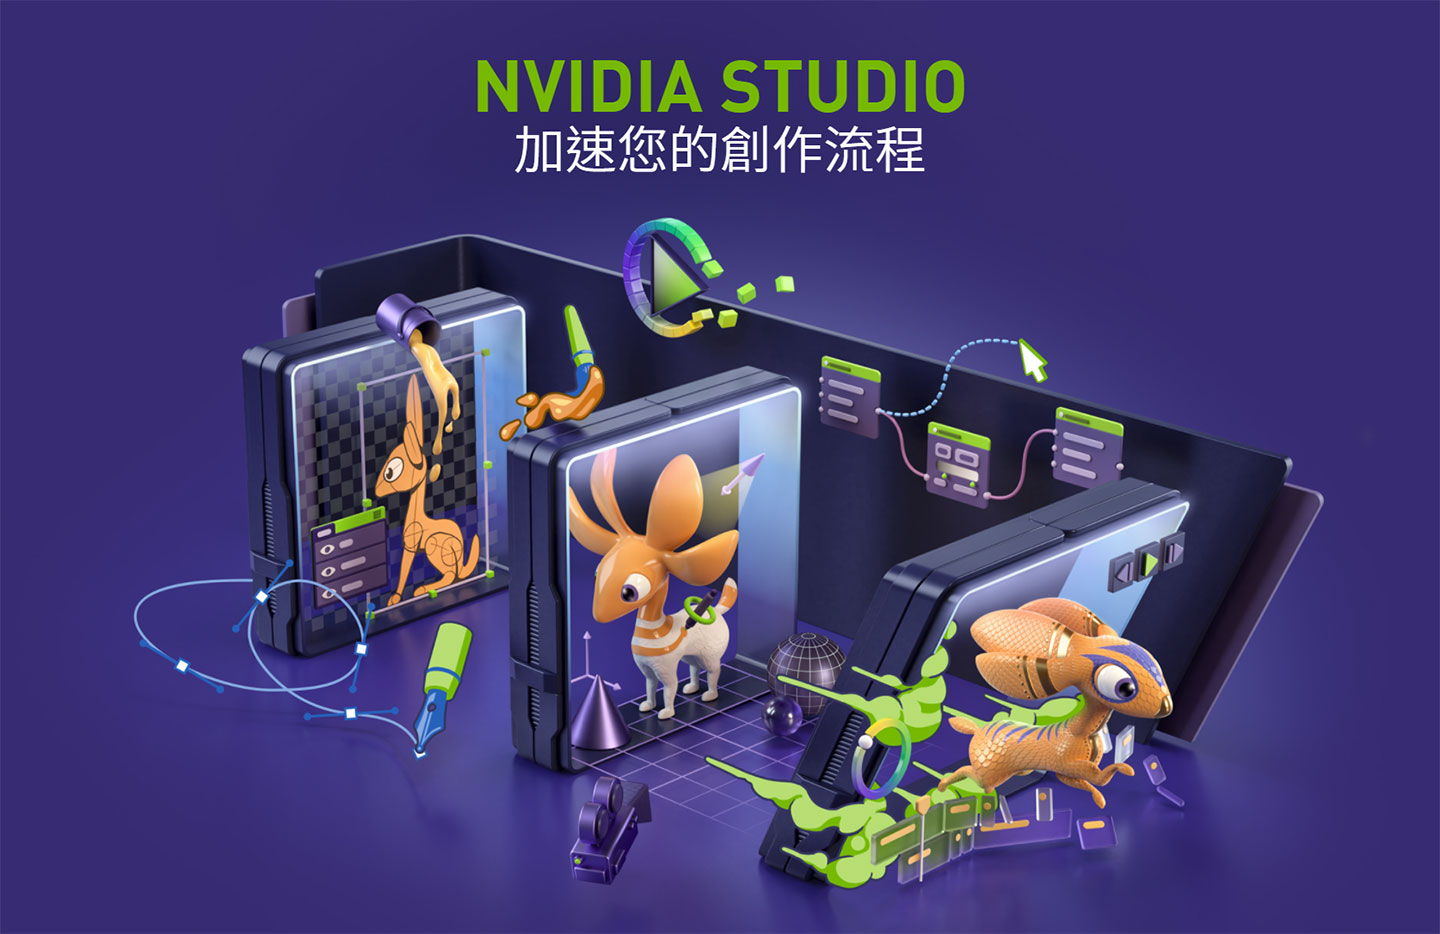 NVIDIA Studio 是專為創作者量身打造的解決方案，市面上也有愈來愈多電產品可以適用。